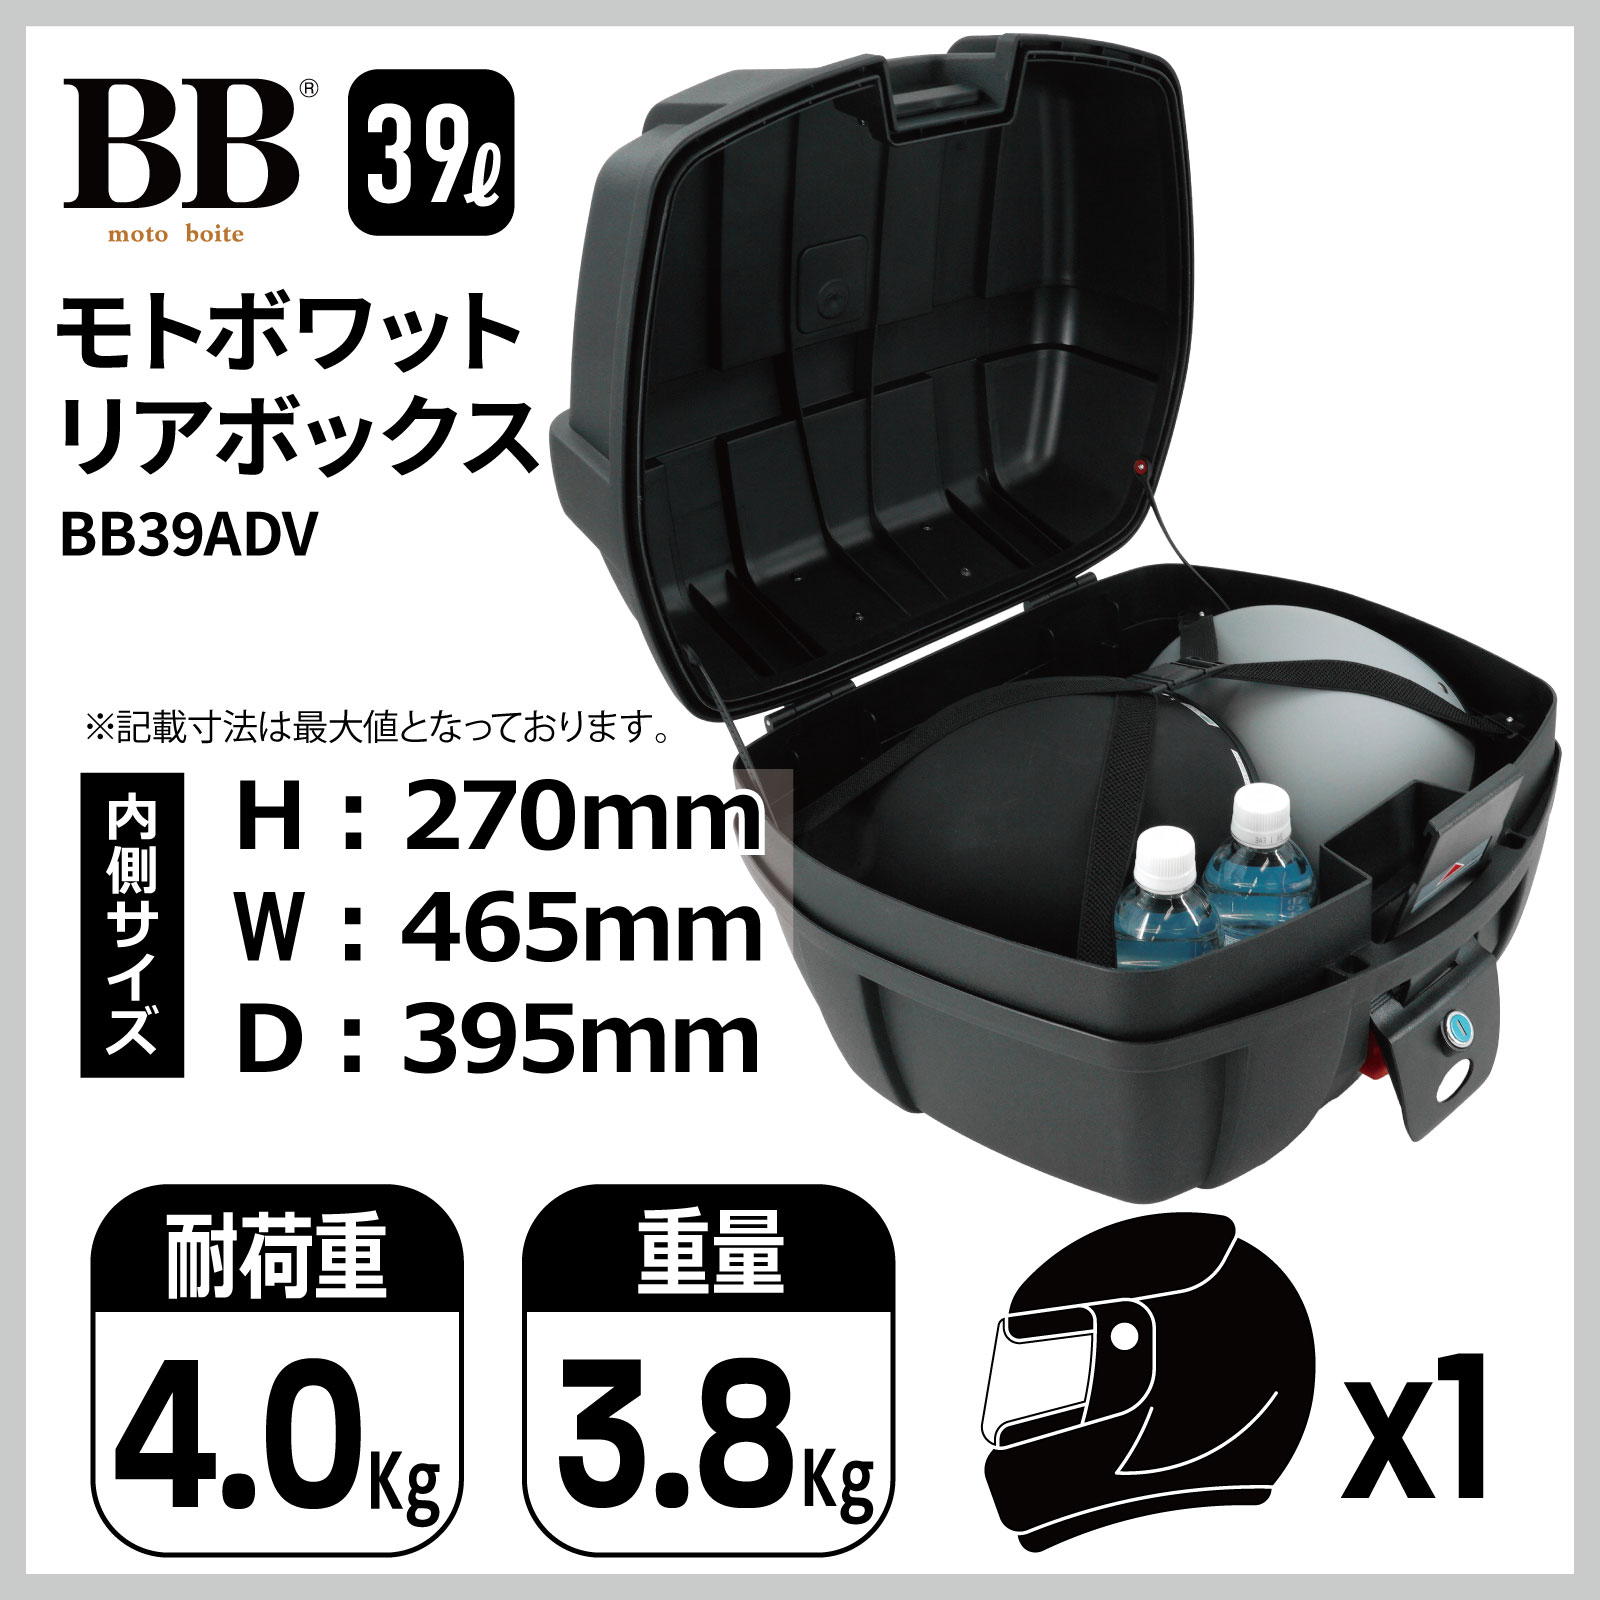  bike rear box top case 39L black for motorcycle back rest attaching .. sause BB39ADV Moto bo watt BB